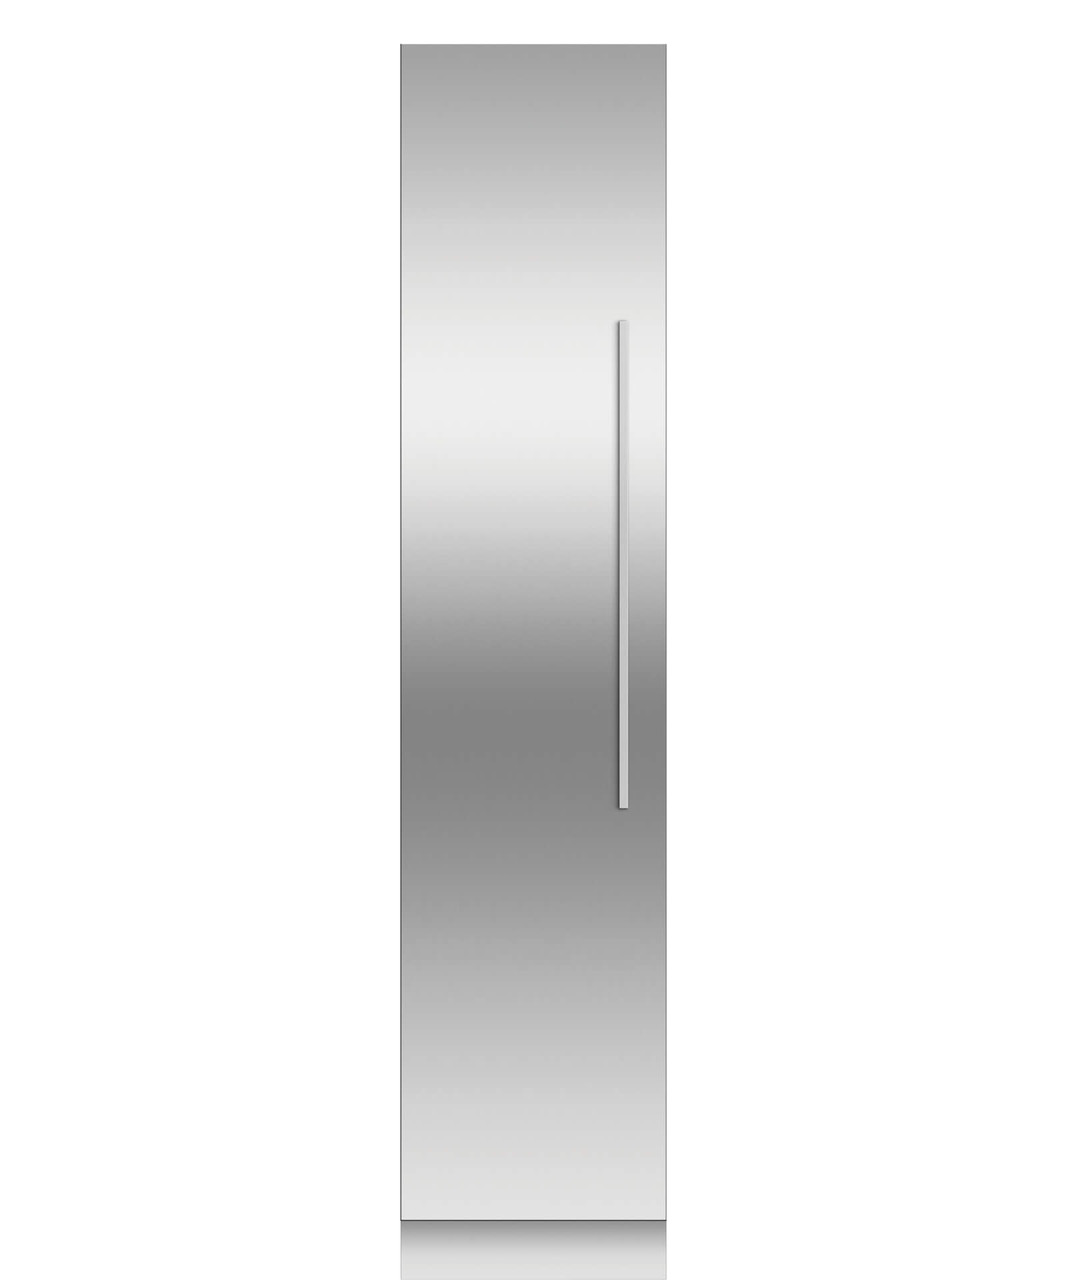 RS4621FLJK1 - 242L Integrated Column Freezer 457mm - Stainless Steel Interior, Left hinge